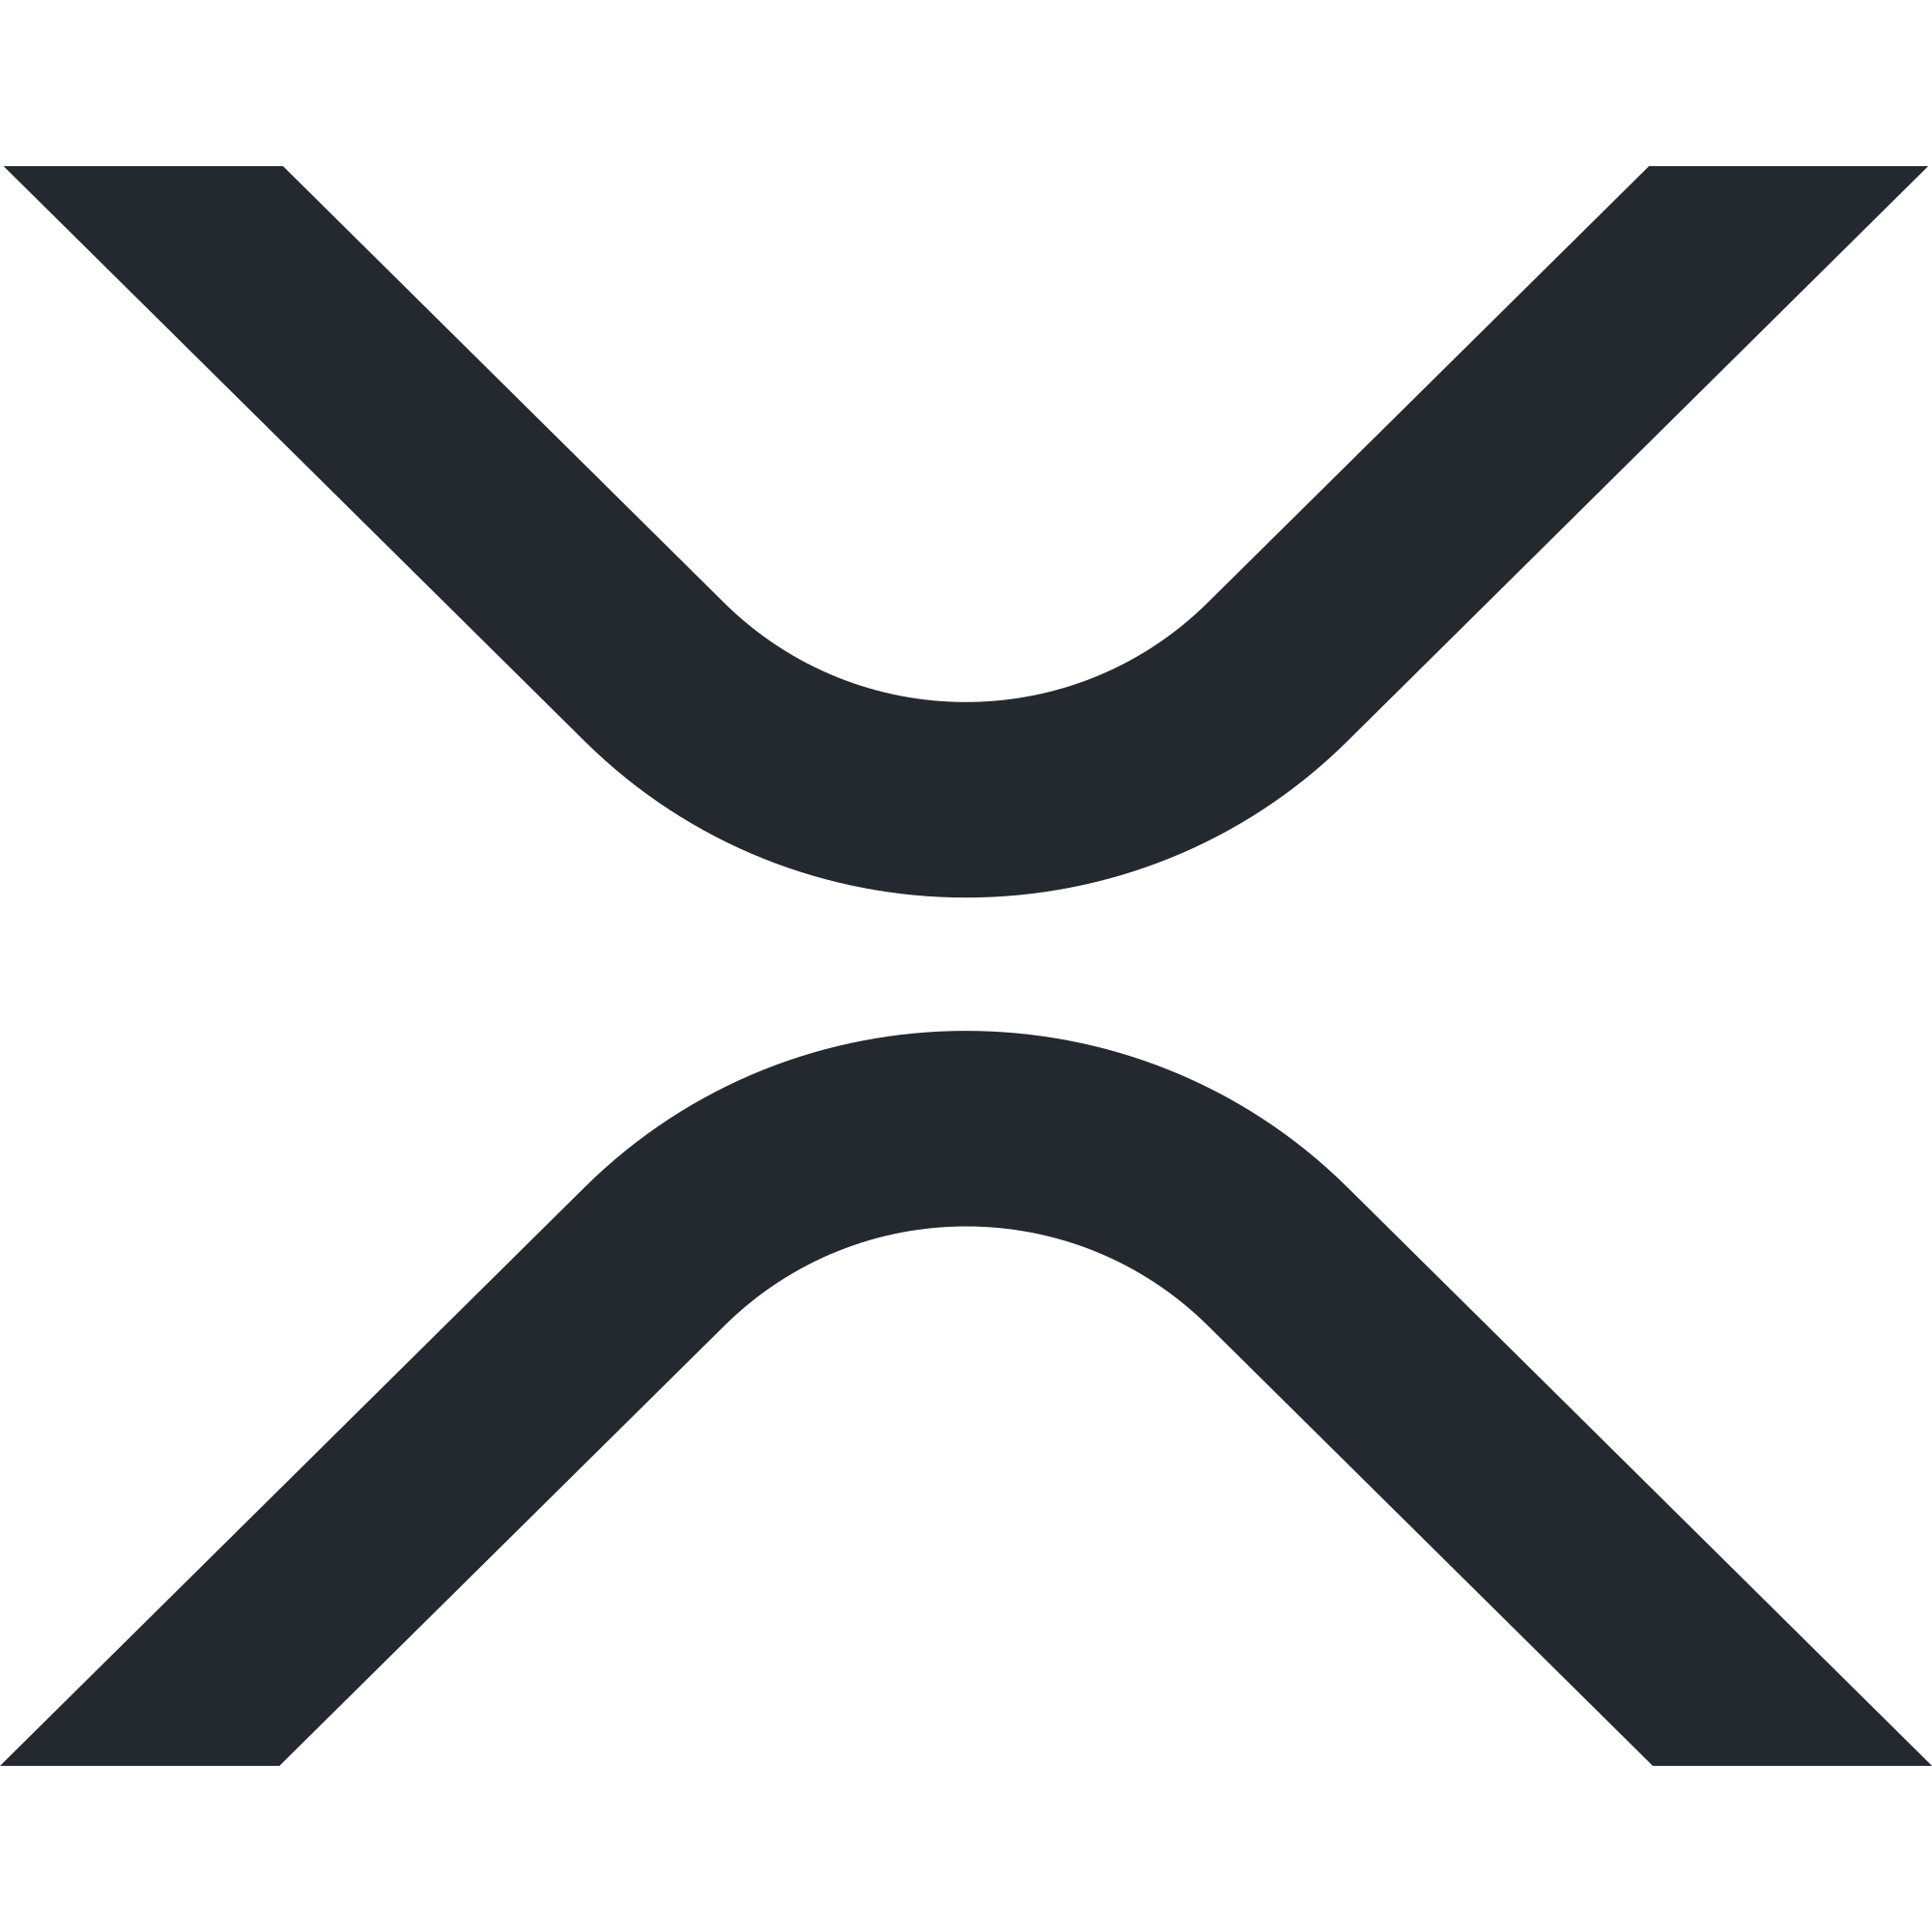 Xrp Symbol Black Vector Logo - Download Free SVG Icon | Worldvectorlogo